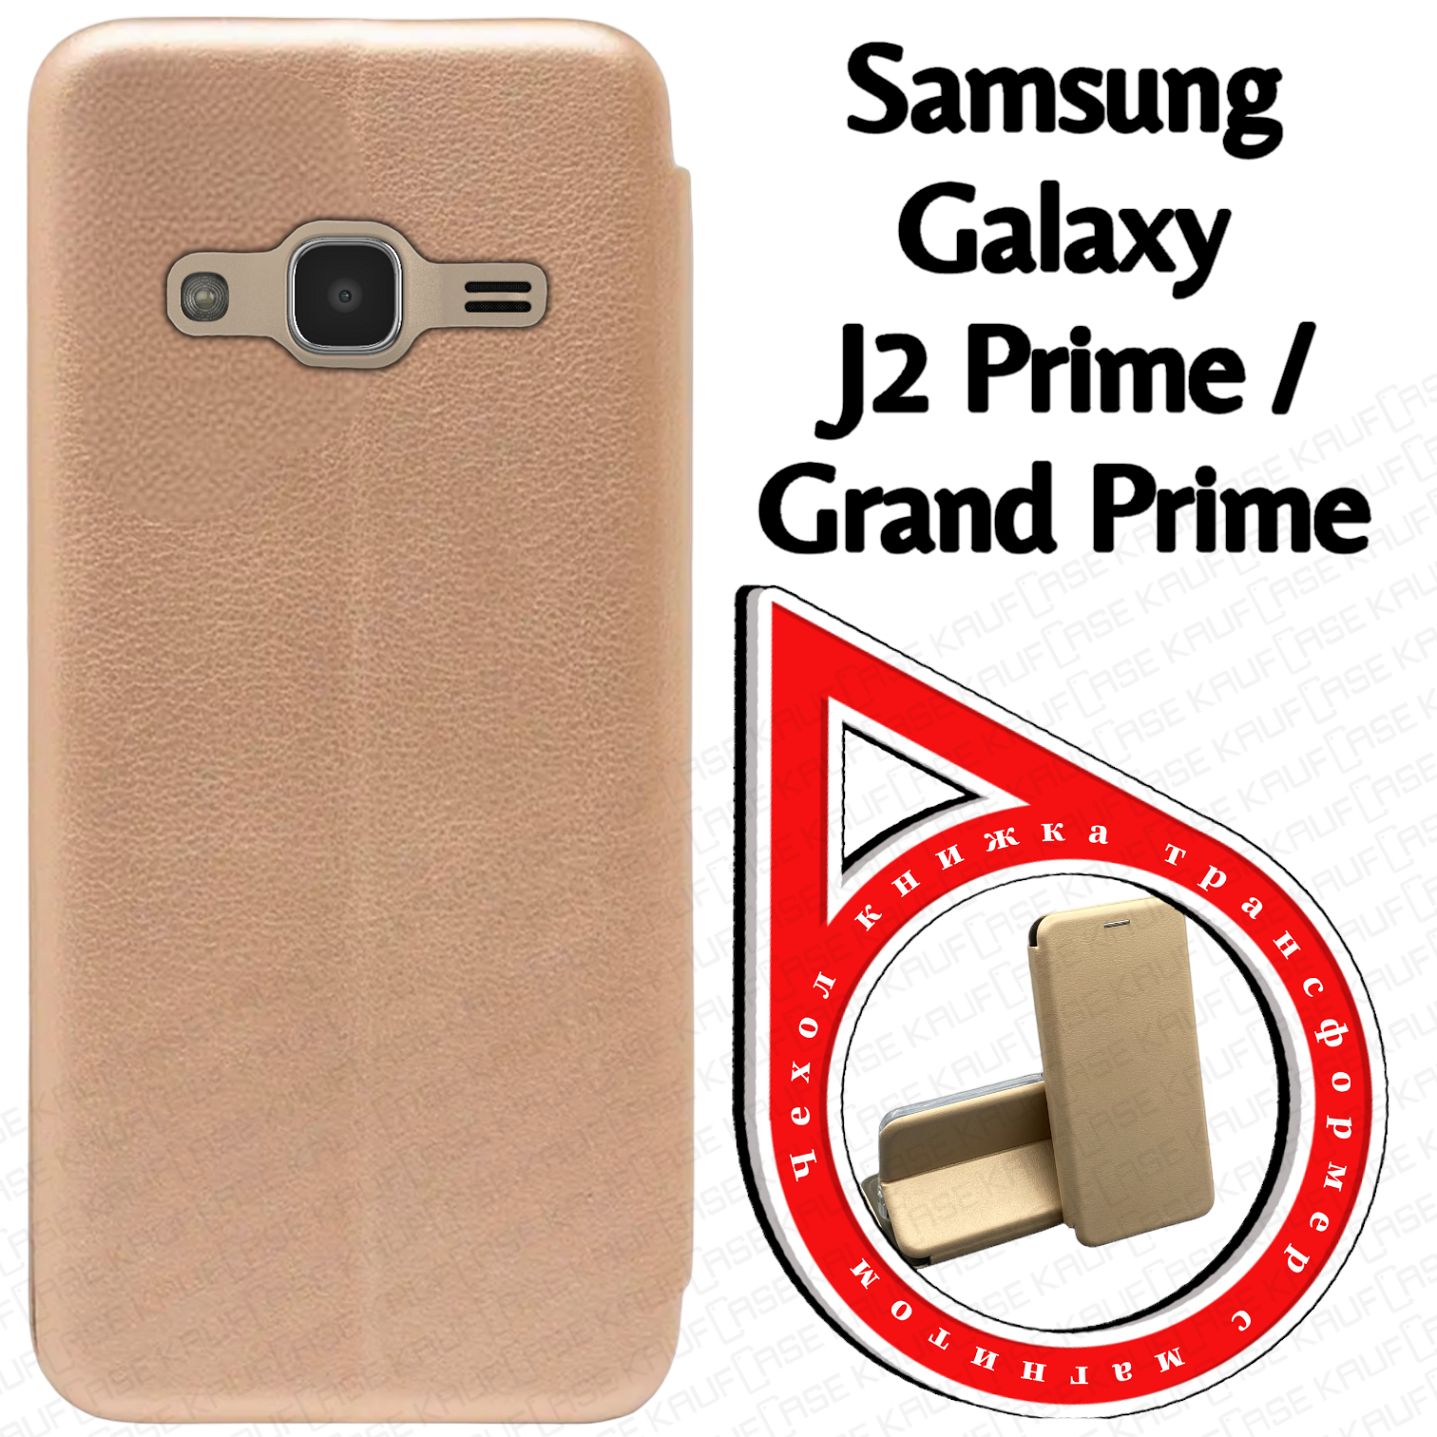 Чехол книжка KaufCase для телефона Samsung J2 Prime (G532) /Grand Prime (5"), золото. Трансфомер